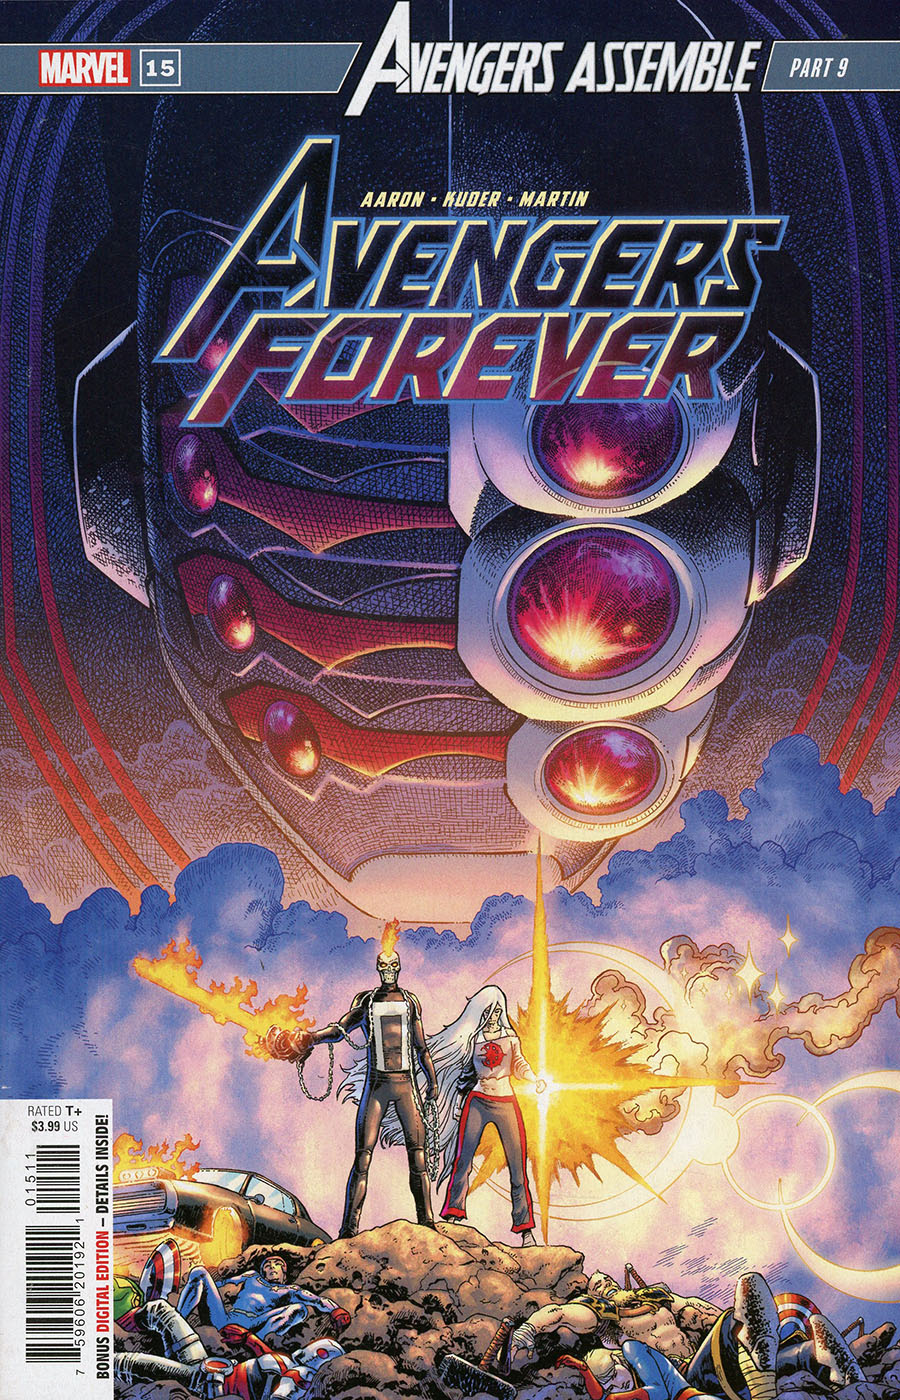 Avengers Forever Vol 2 #15 Cover A Regular Aaron Kuder Cover (Avengers Assemble Part 9)